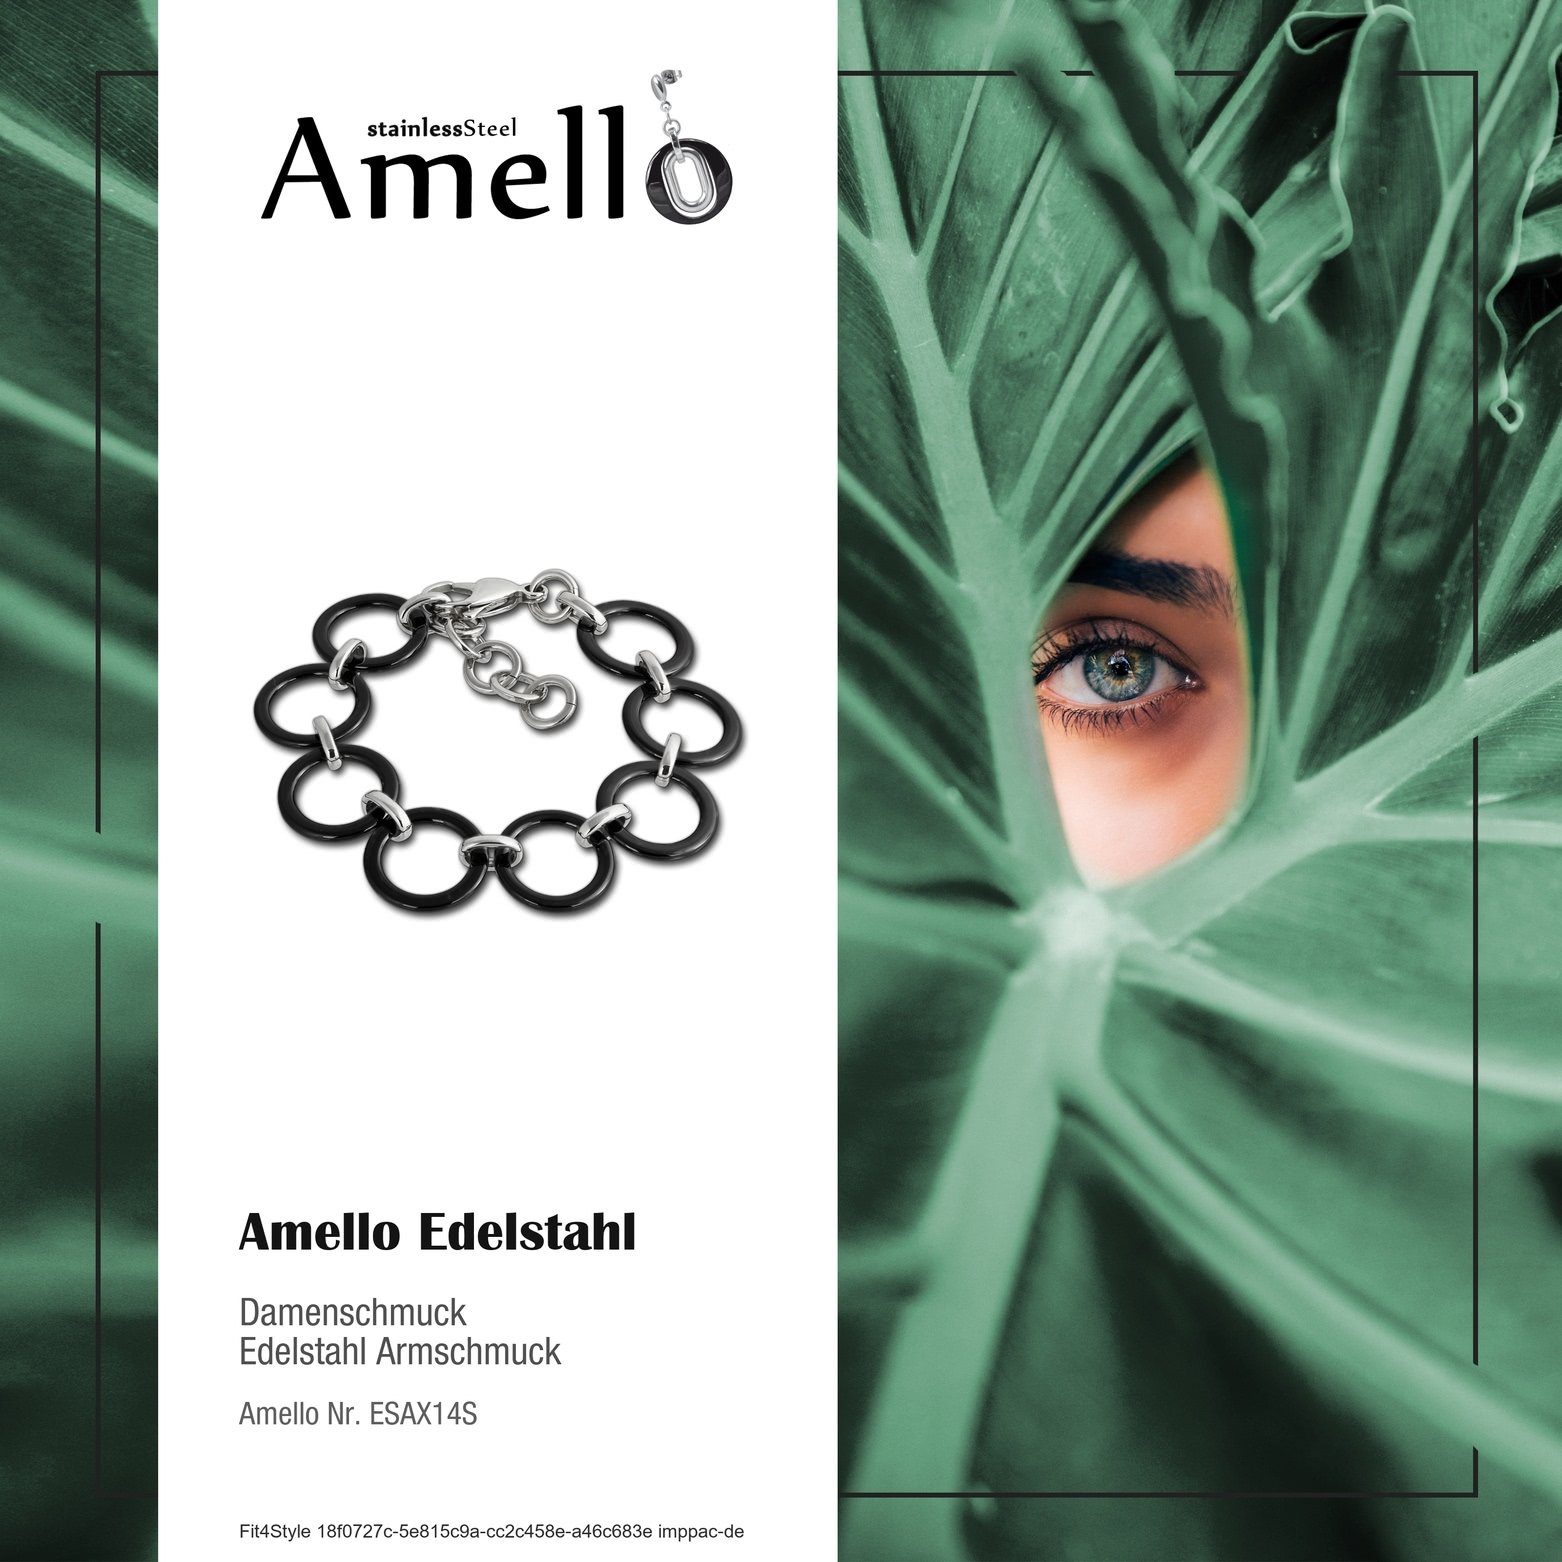 Amello Edelstahlarmband Amello Circle Armband silber für Edelstahl (Stainless (Armband), Steel) Armbänder schwarz Damen